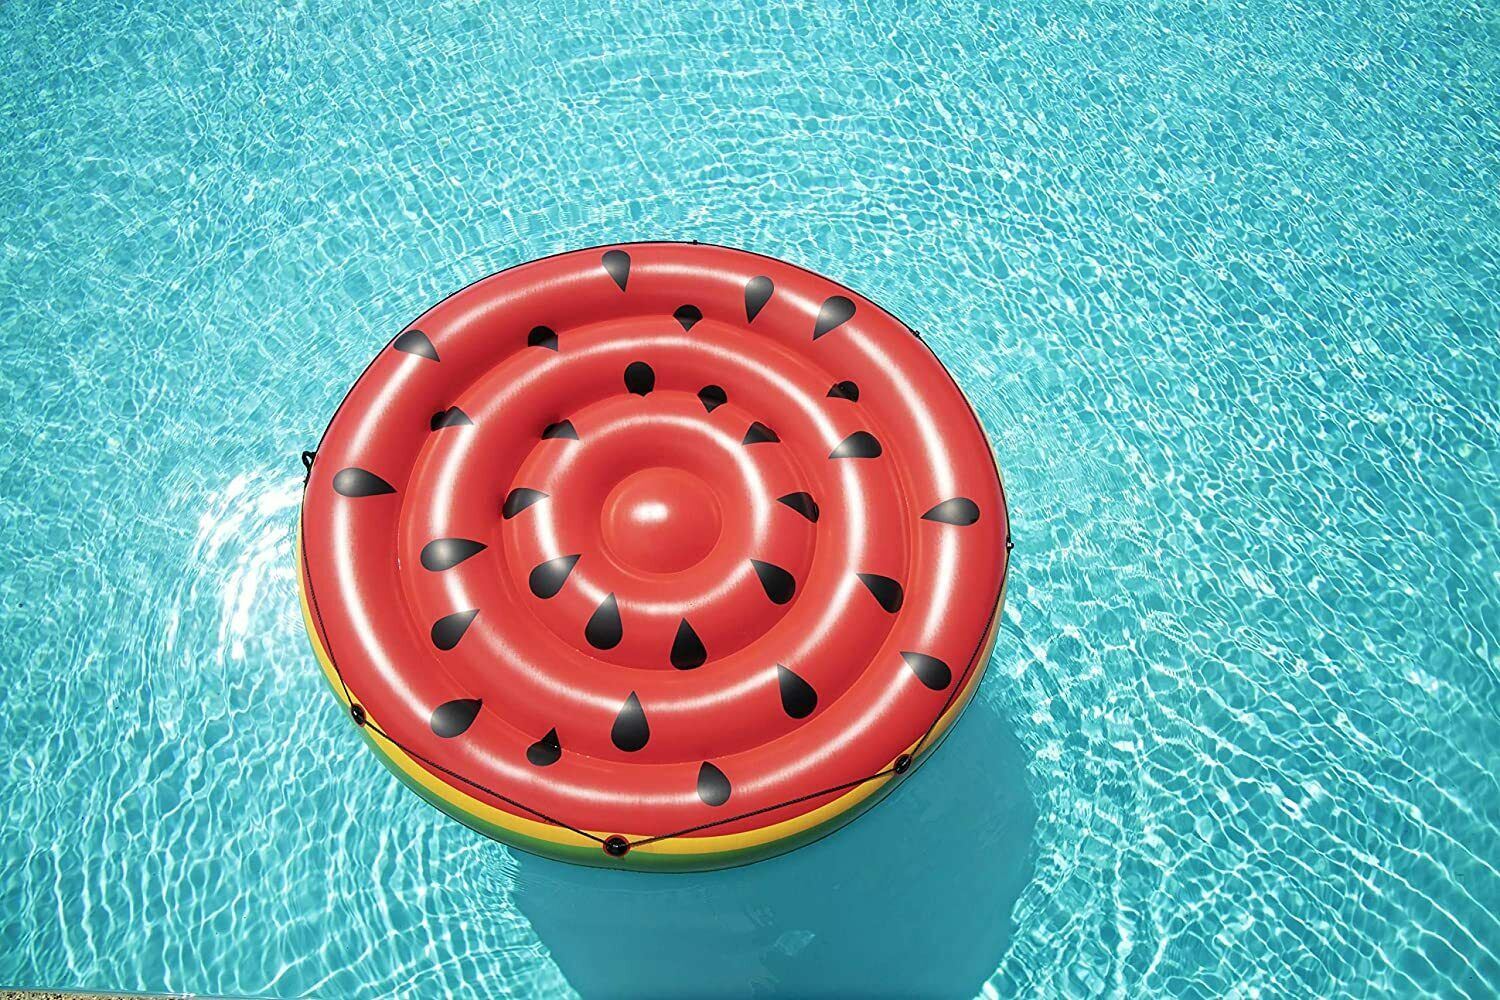 Bestway Watermelon Island Pool Float Inflatable Lilo Novelty